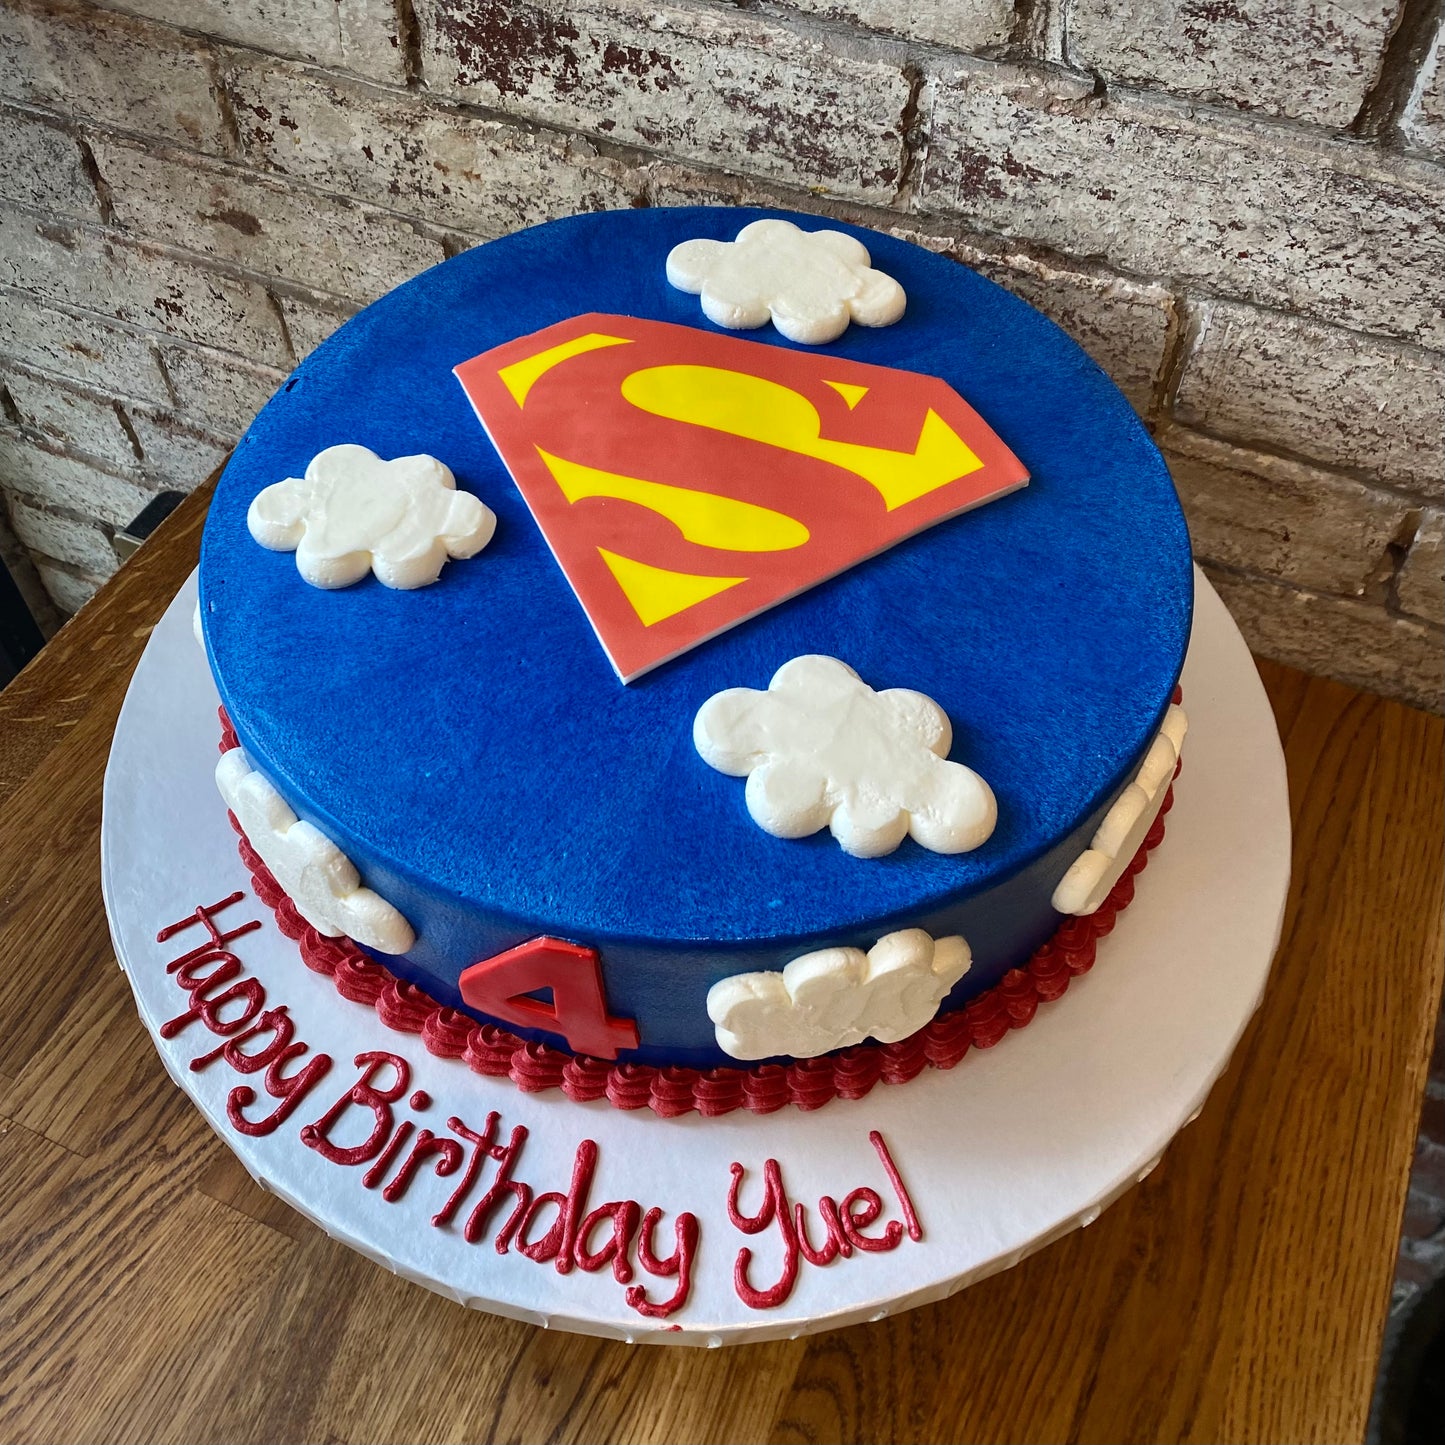 Superman cake for kid's birthday